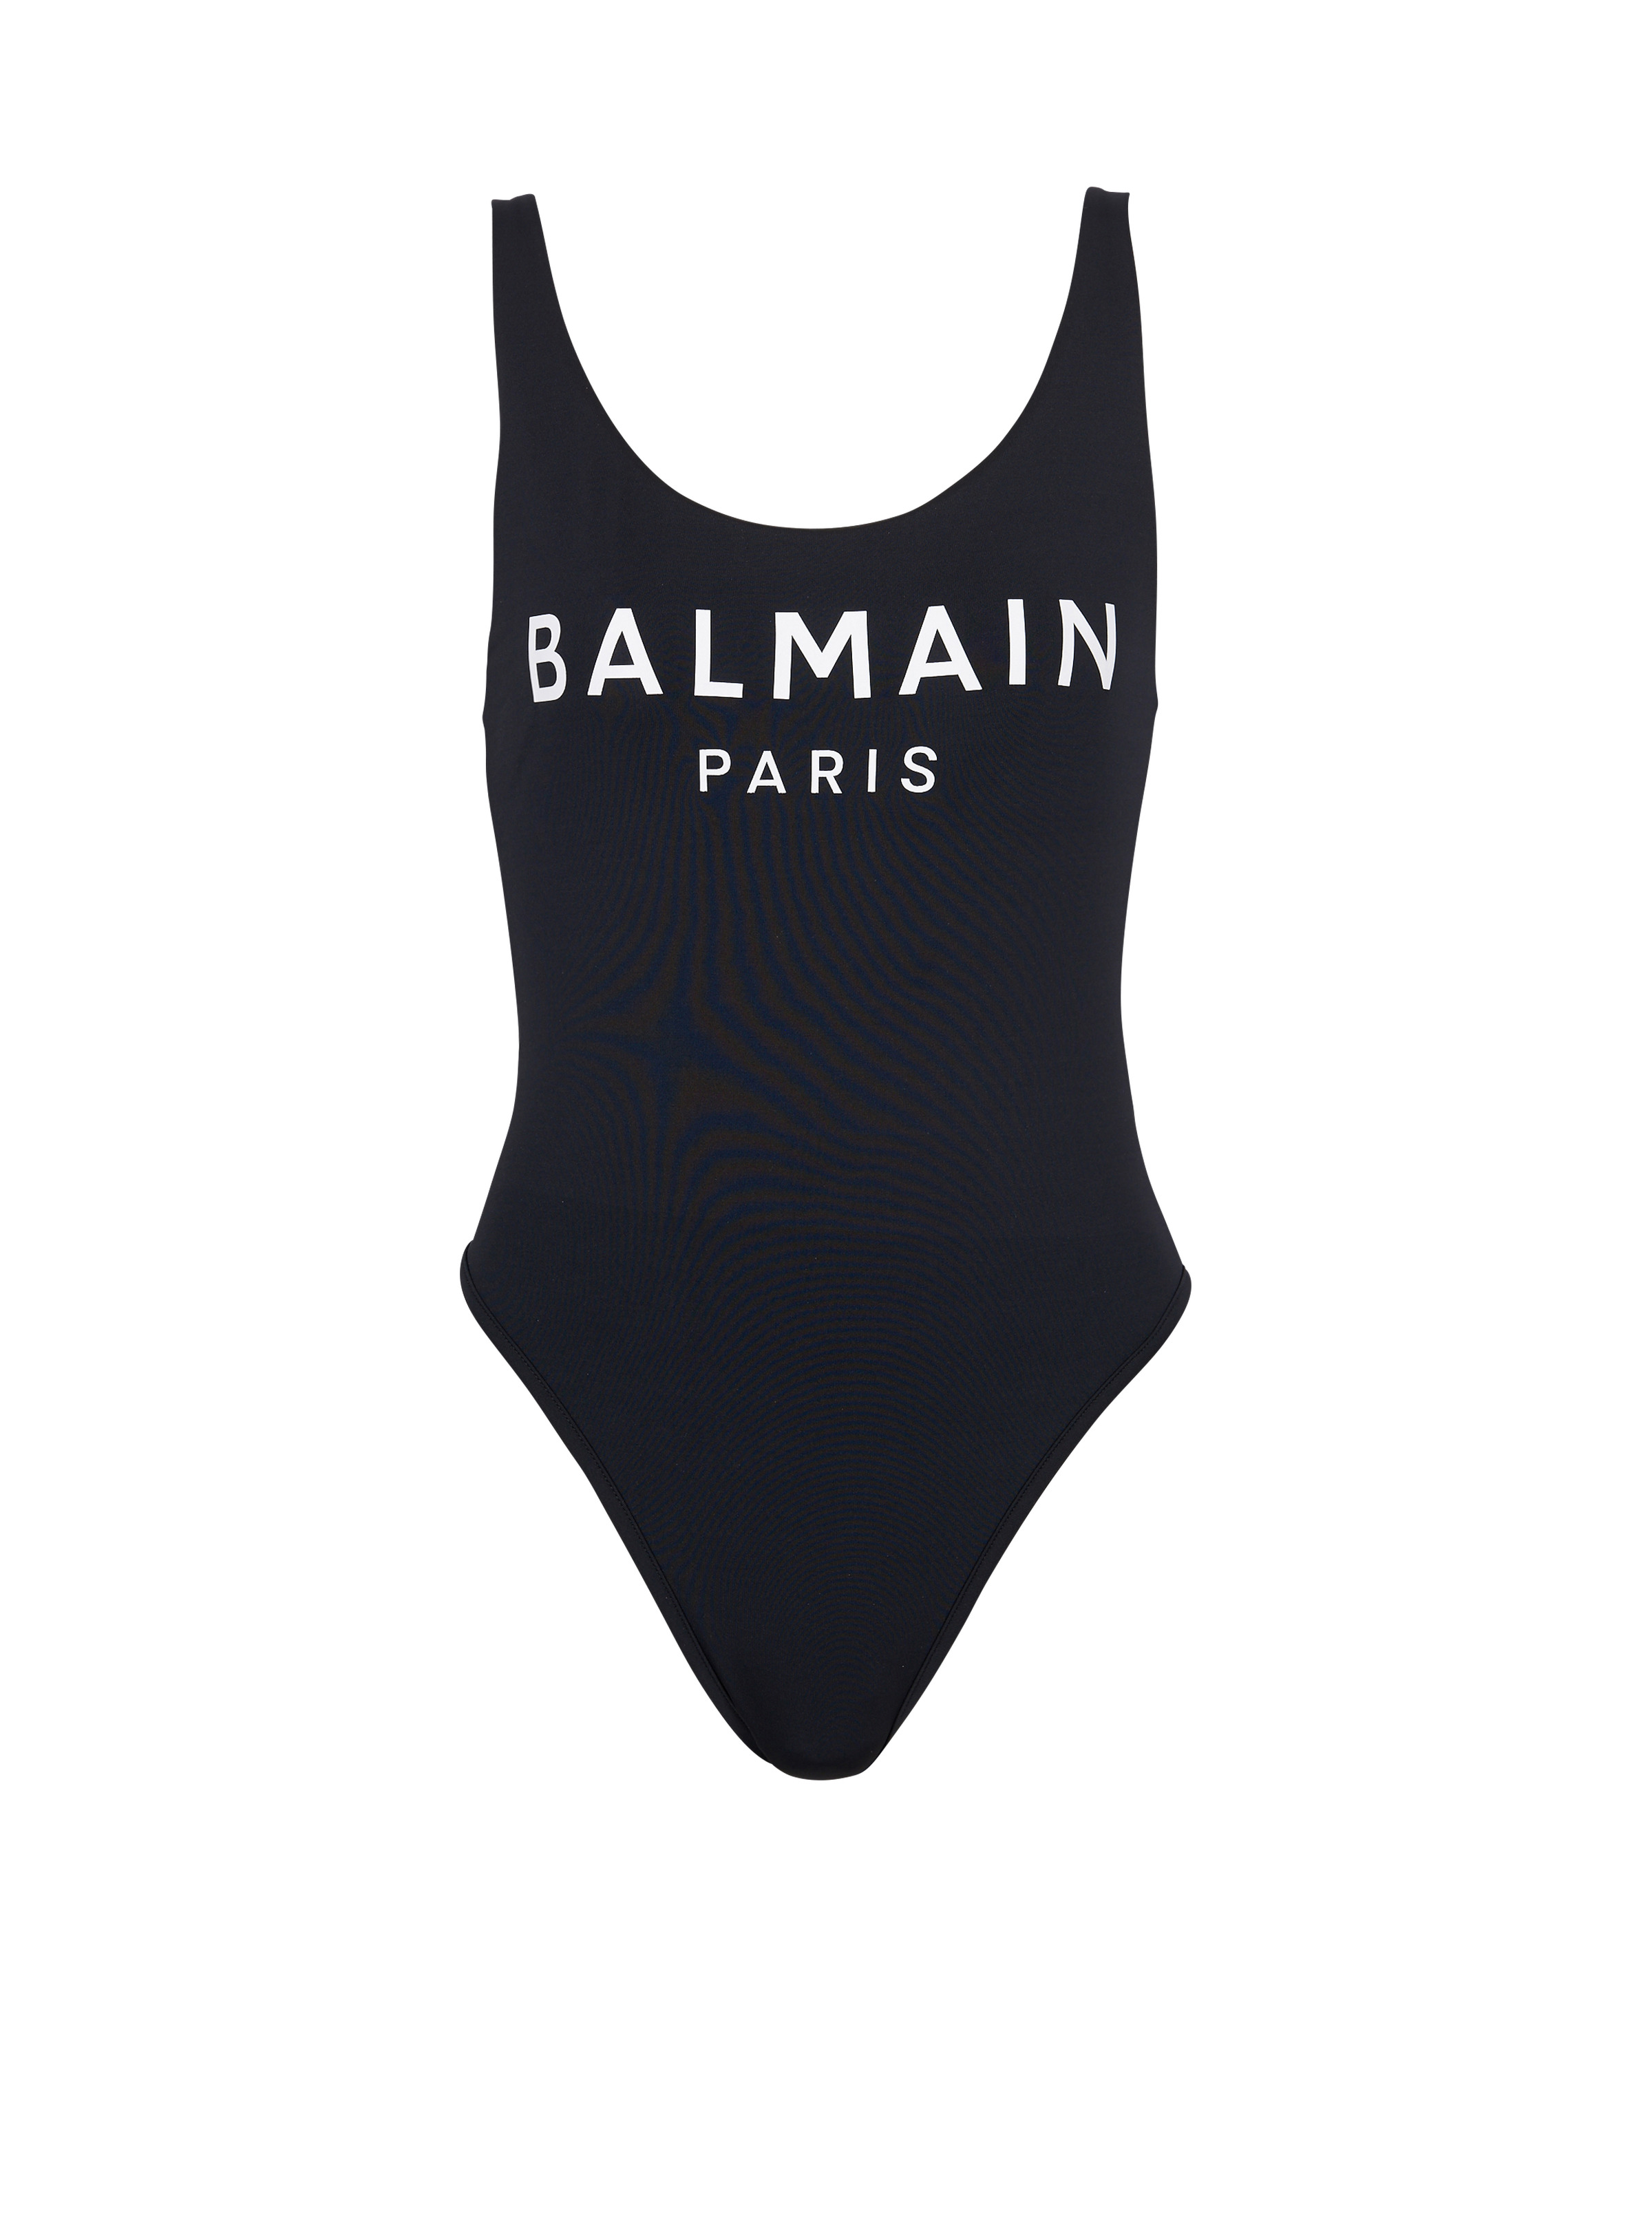 Balmain Paris swimsuit - 1